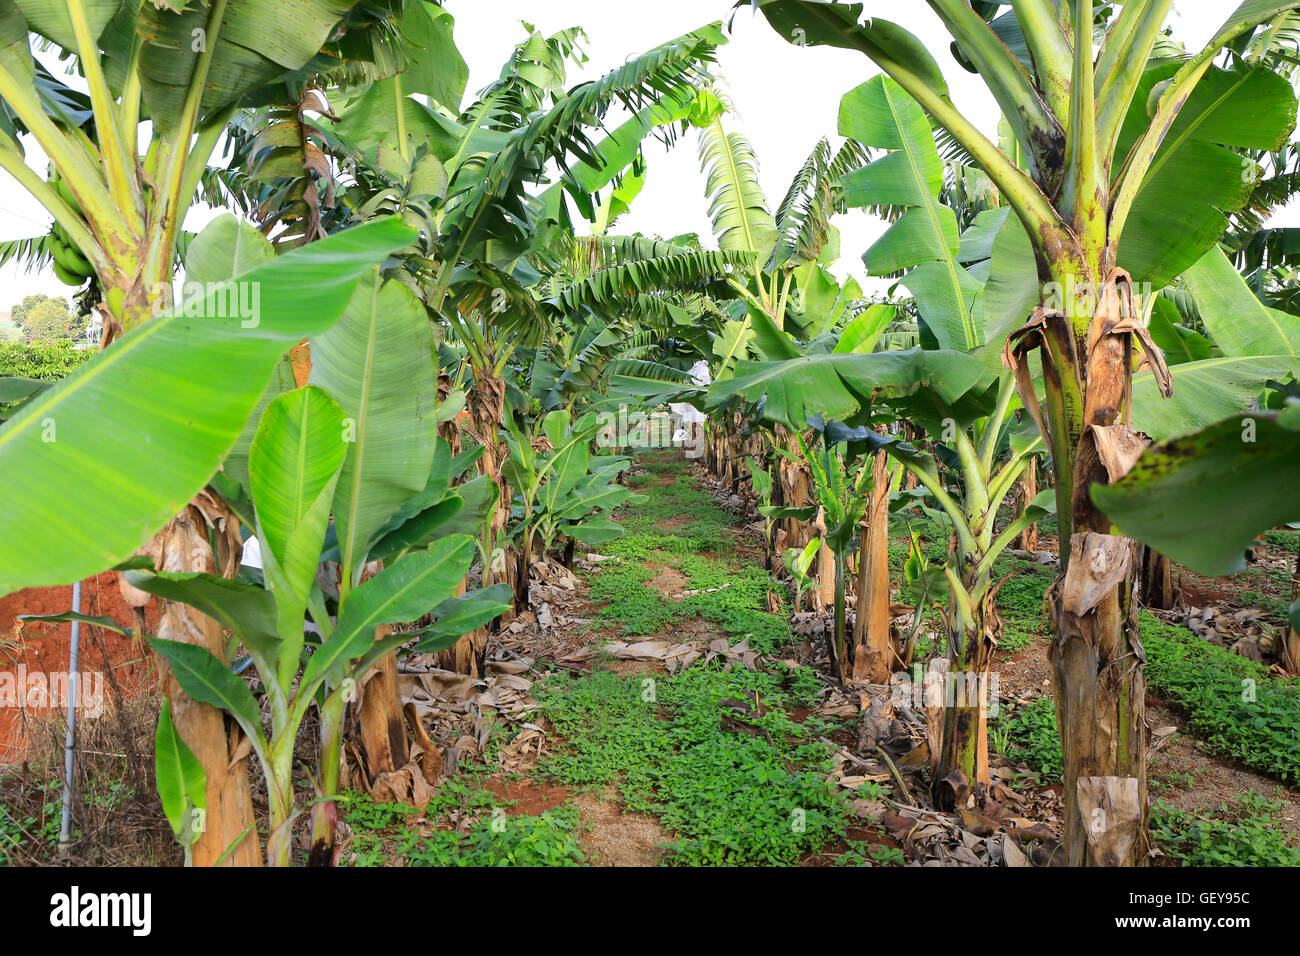 Banana Plantation Field in Vietnam Stock Photo - Alamy